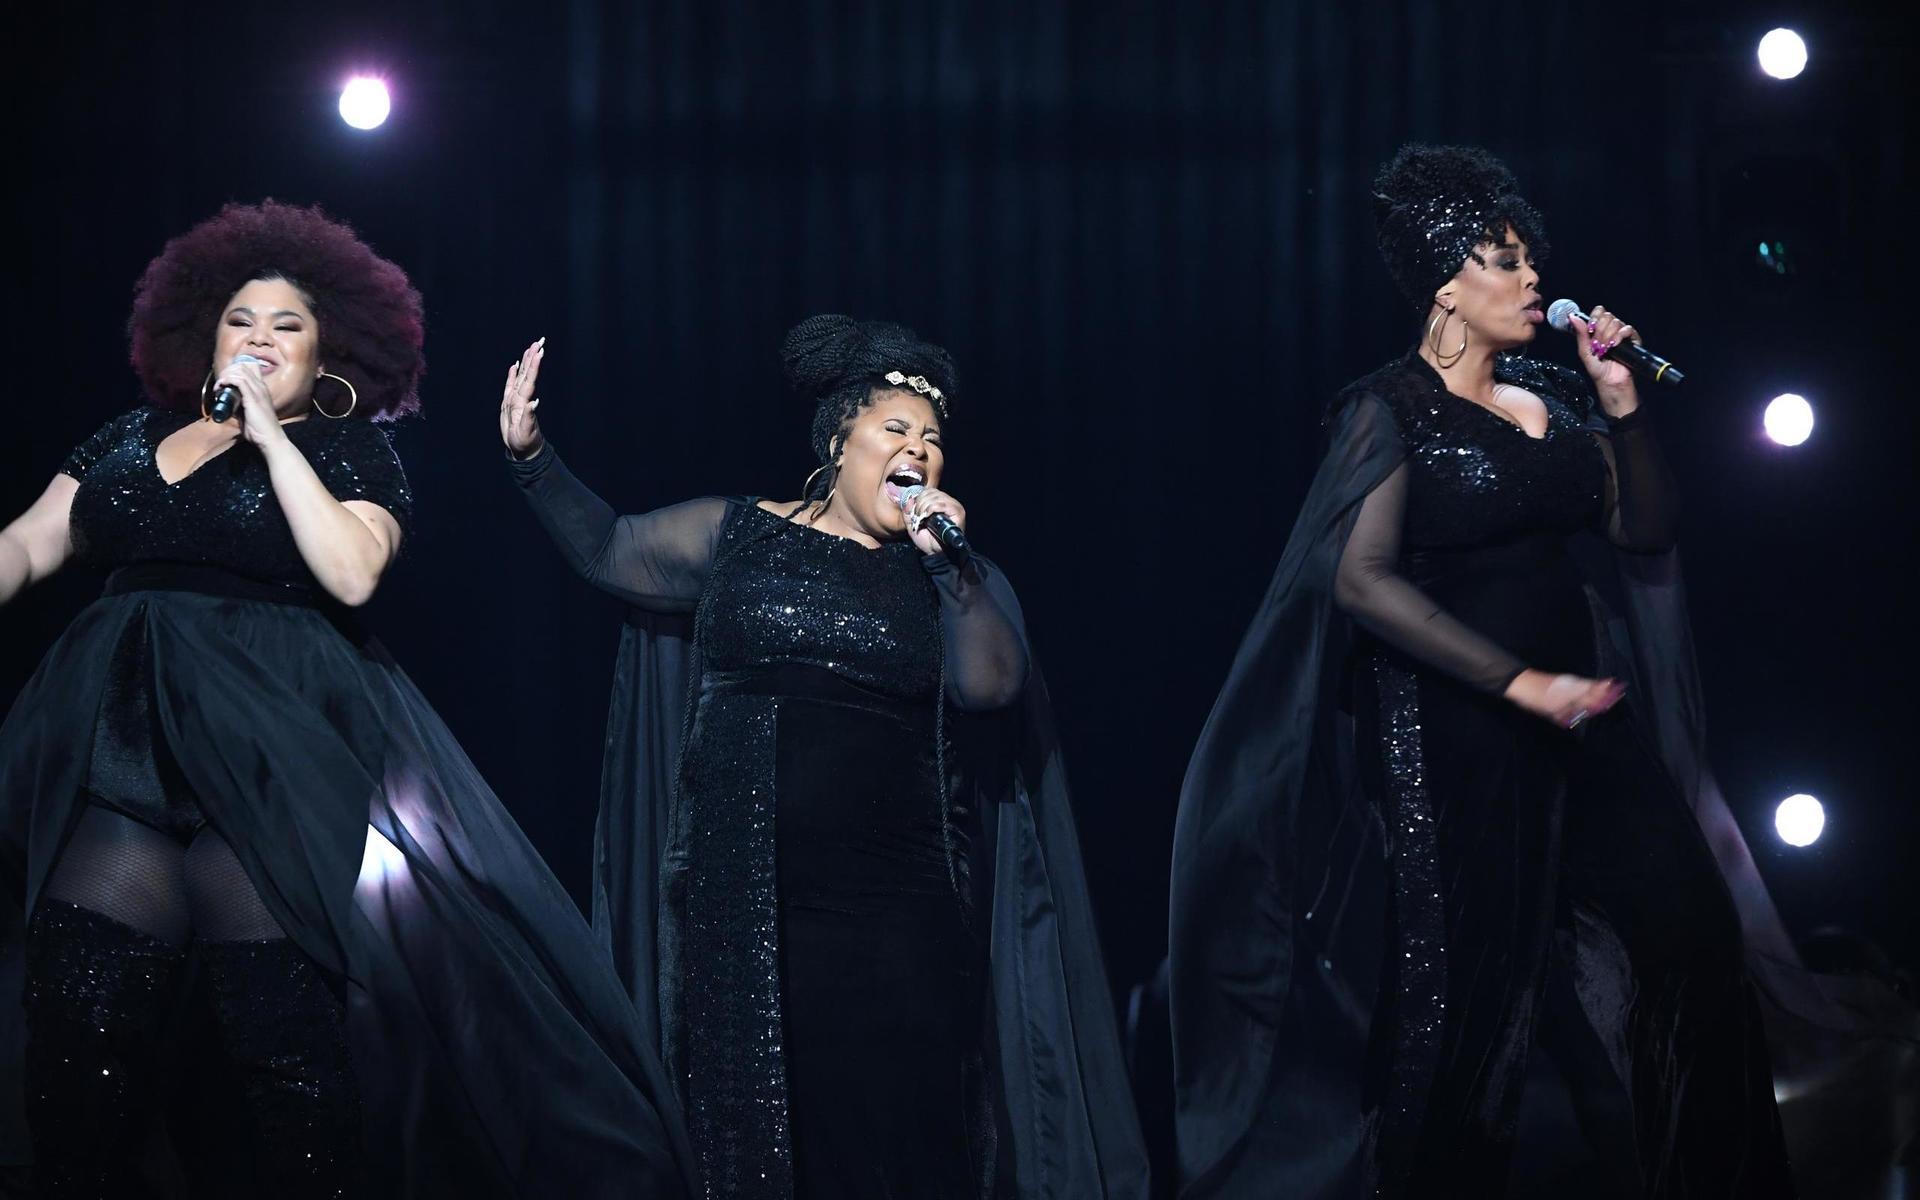 The Mamas med bidraget ”Move” som vann Melodifestivalen 2020.